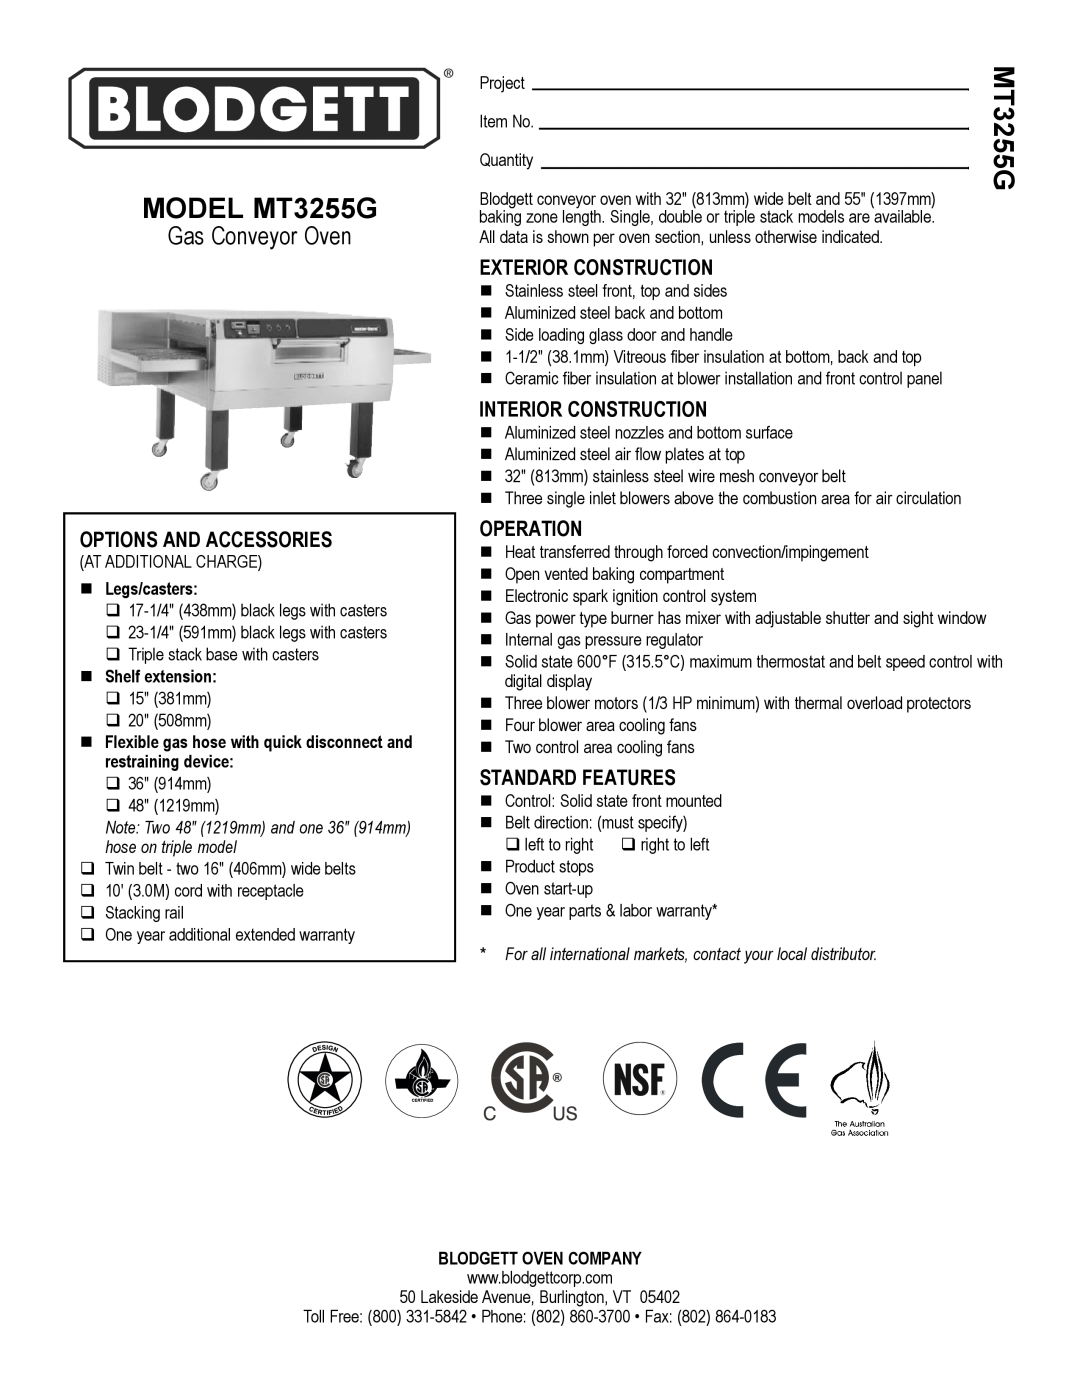 Blodgett warranty MODEL MT3255G, Options And Accessories, Exterior Construction, Interior Construction, Operation 